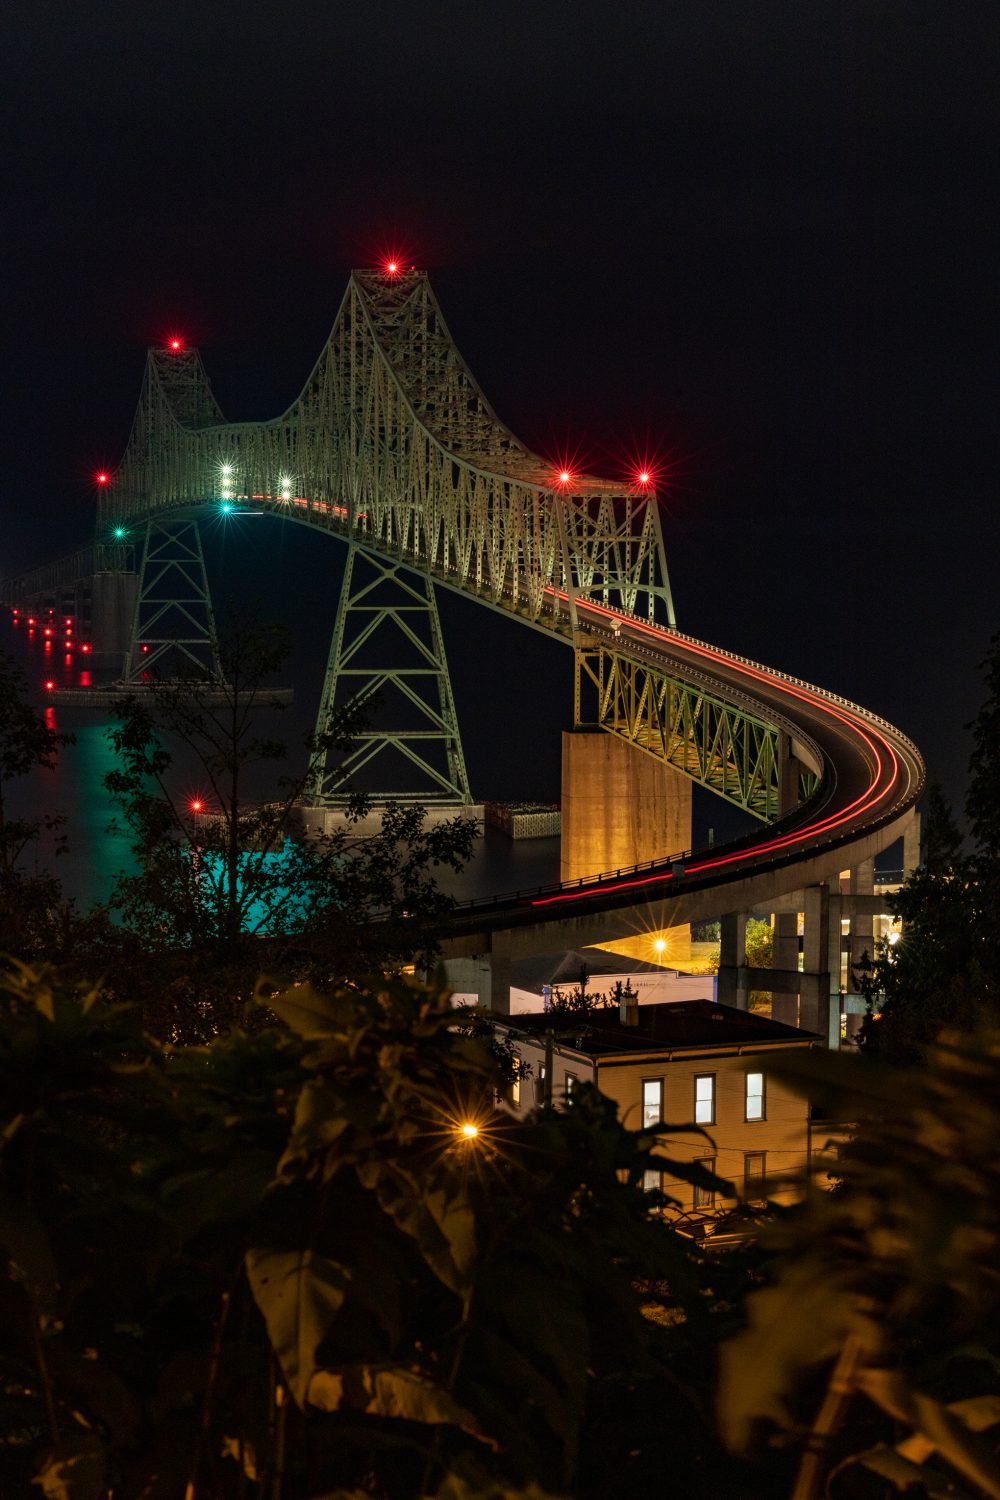 The Astoria-Megler bridge at night with light trails.